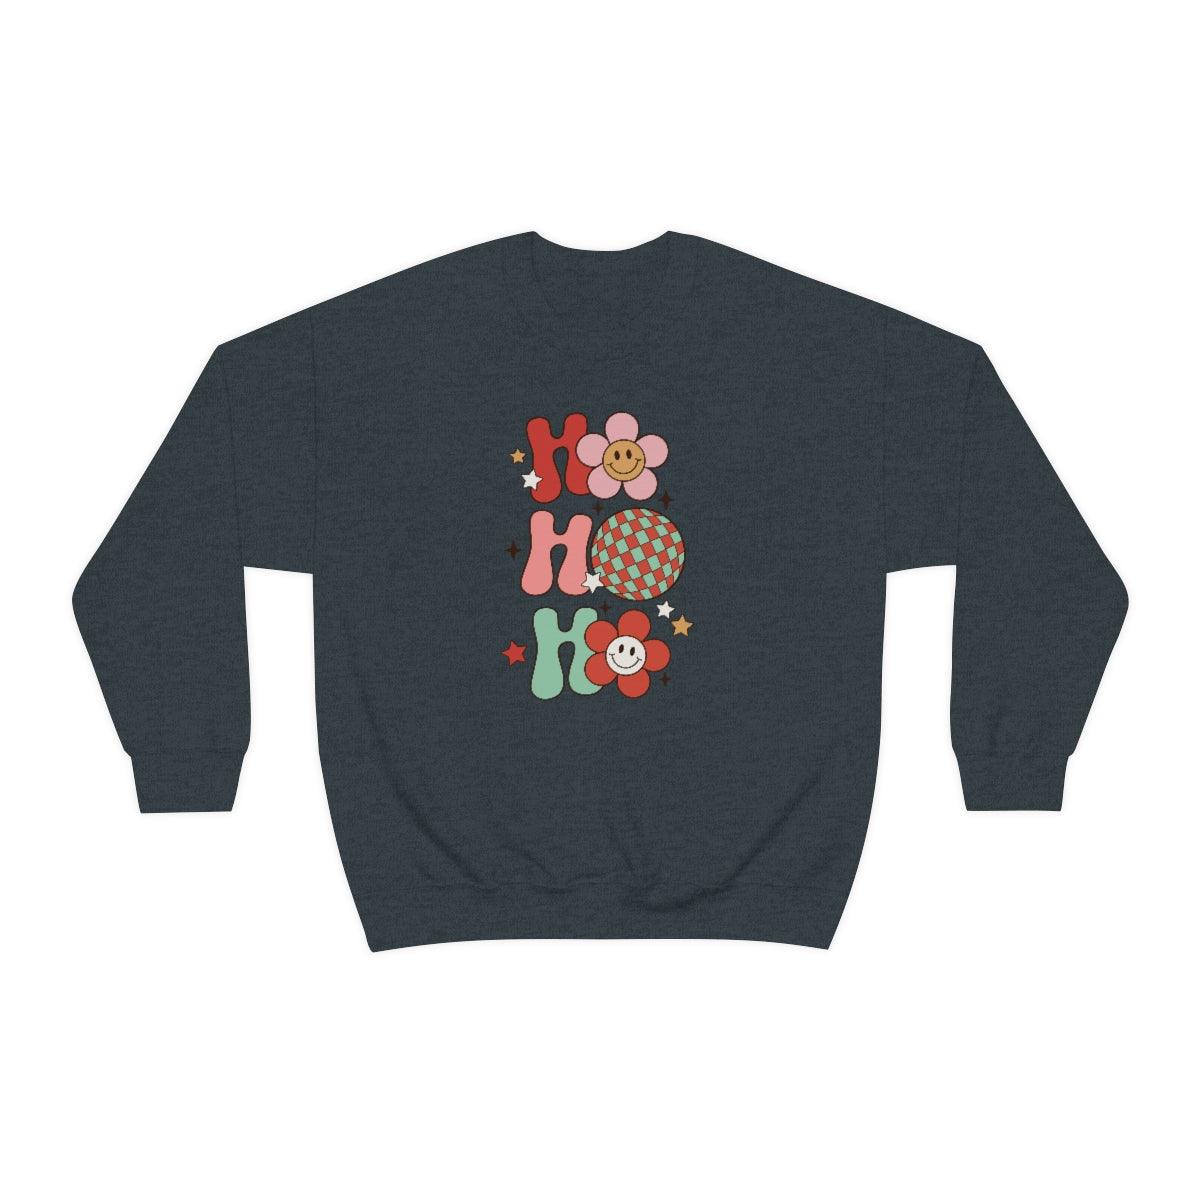 Retro Ho Ho Ho Christmas Crewneck Sweater